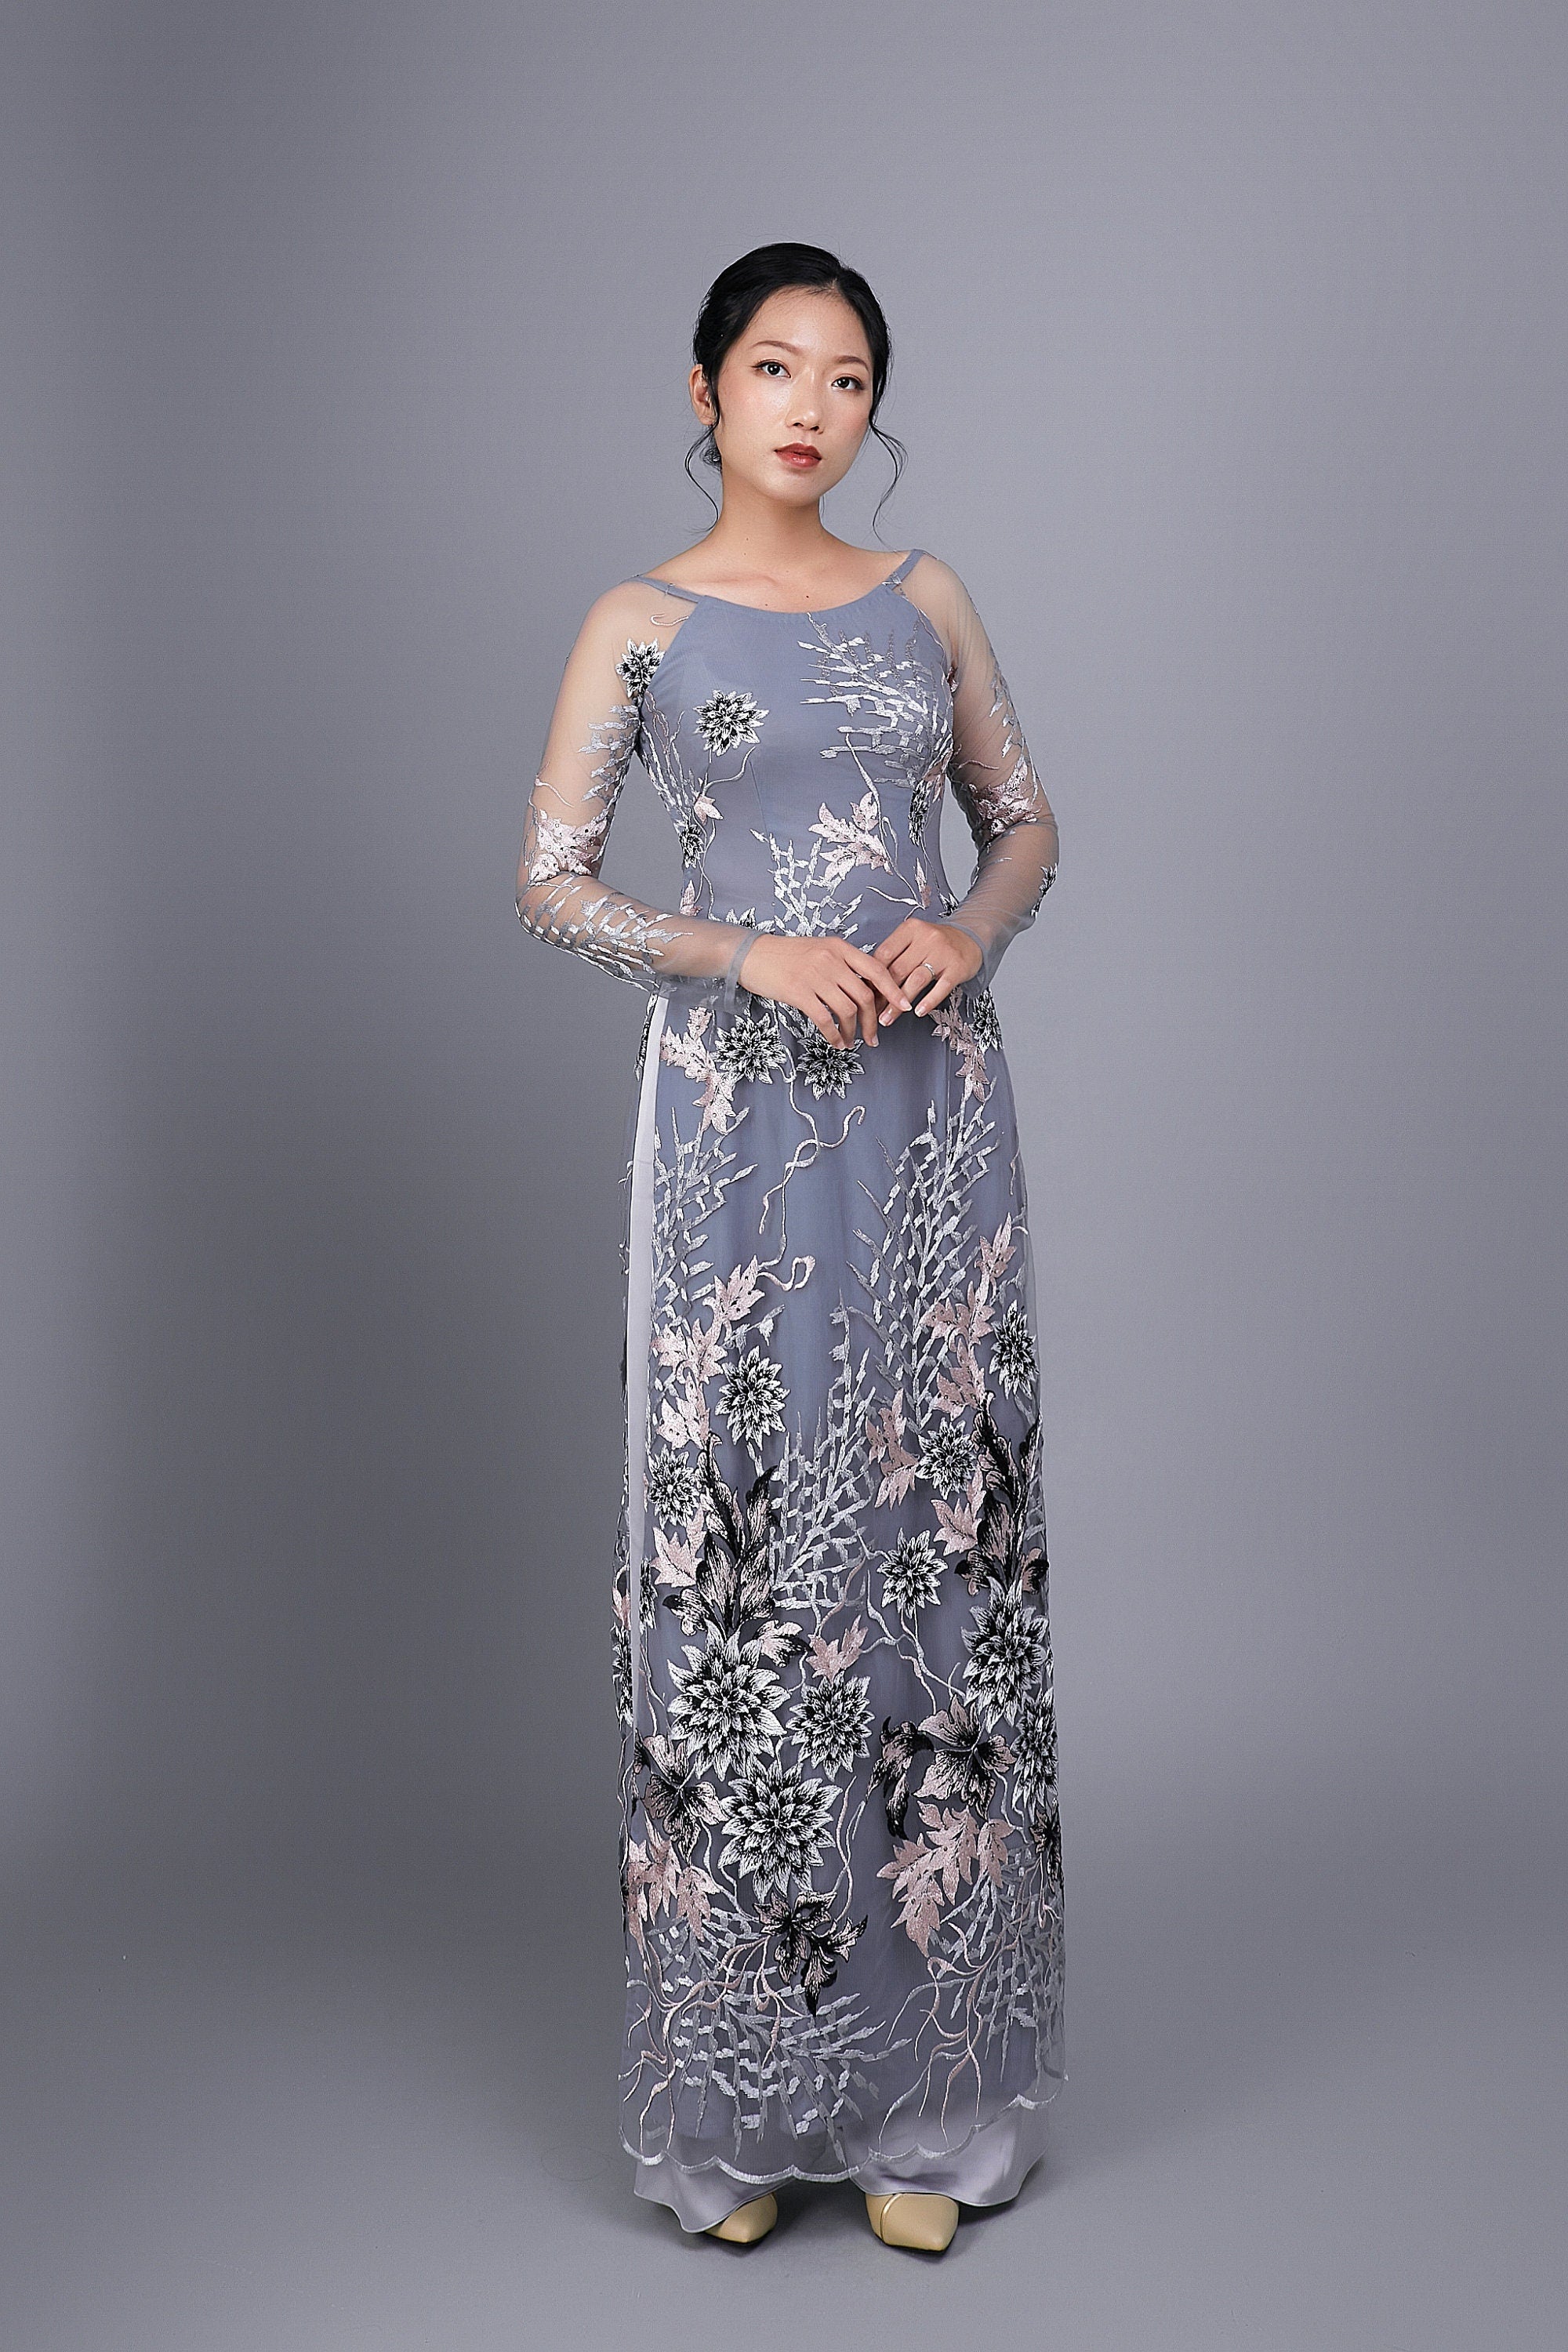 Custom Ao Dai. Floral motif lace over gray chiffon fabric.